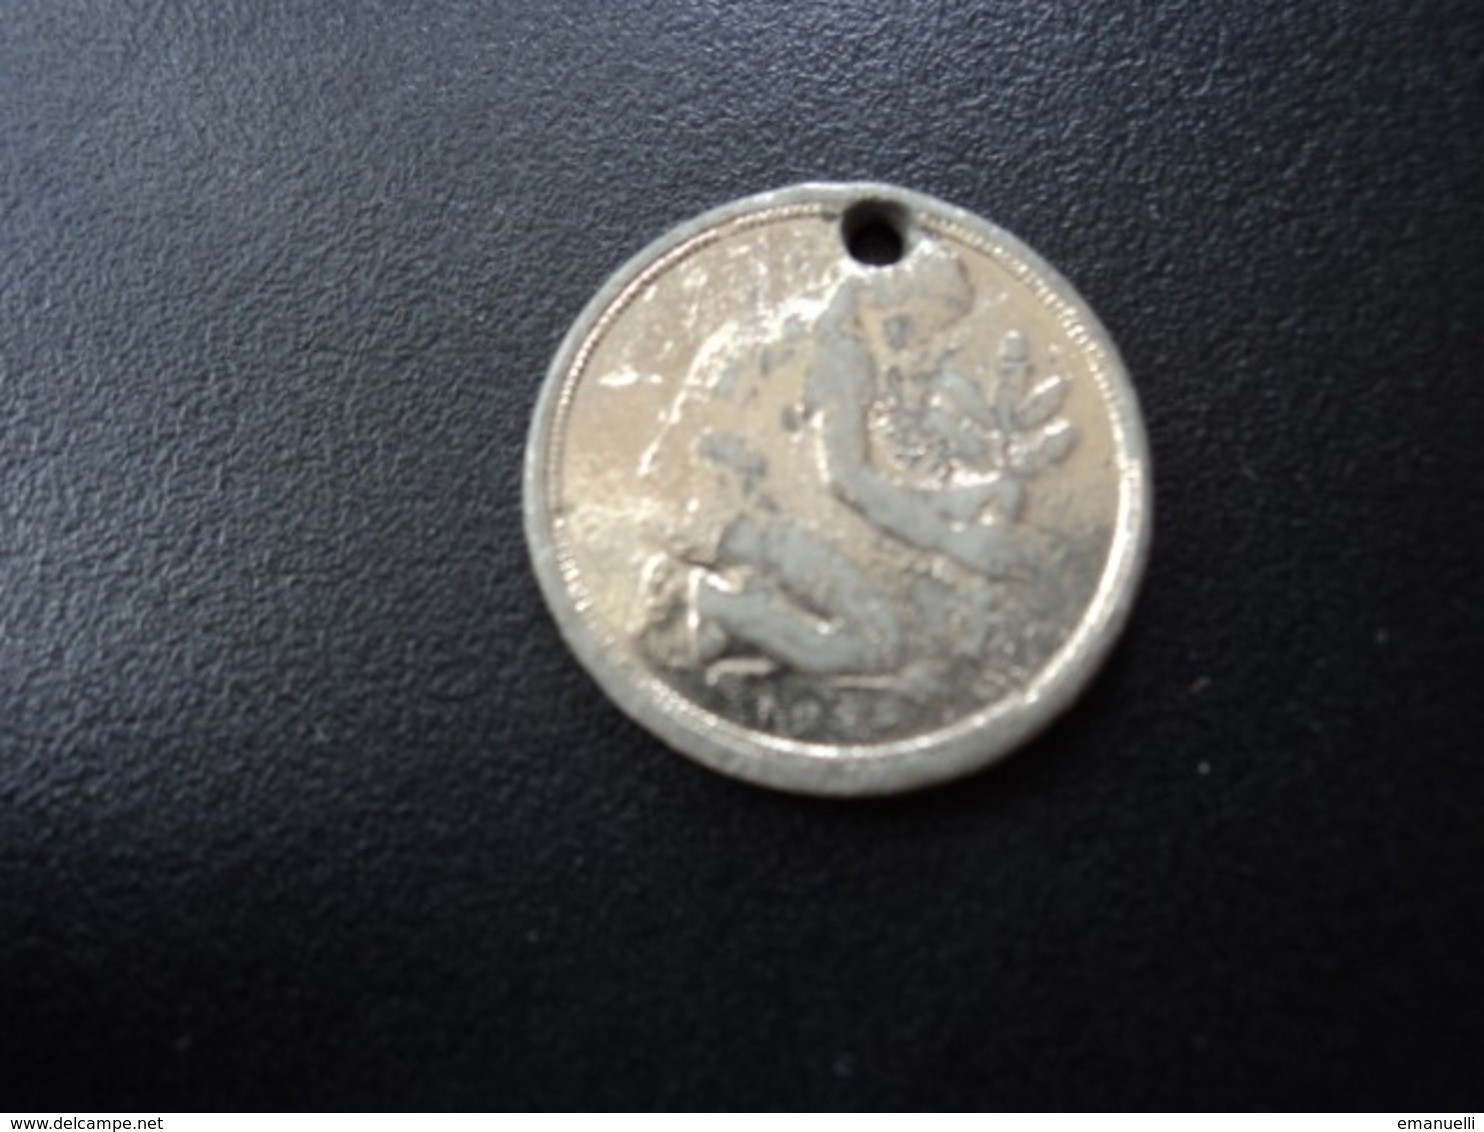 50 PFENNIG 1949 J DEUTSCHER LÄNDER MALTRAITÉE  * - Monedas Elongadas (elongated Coins)